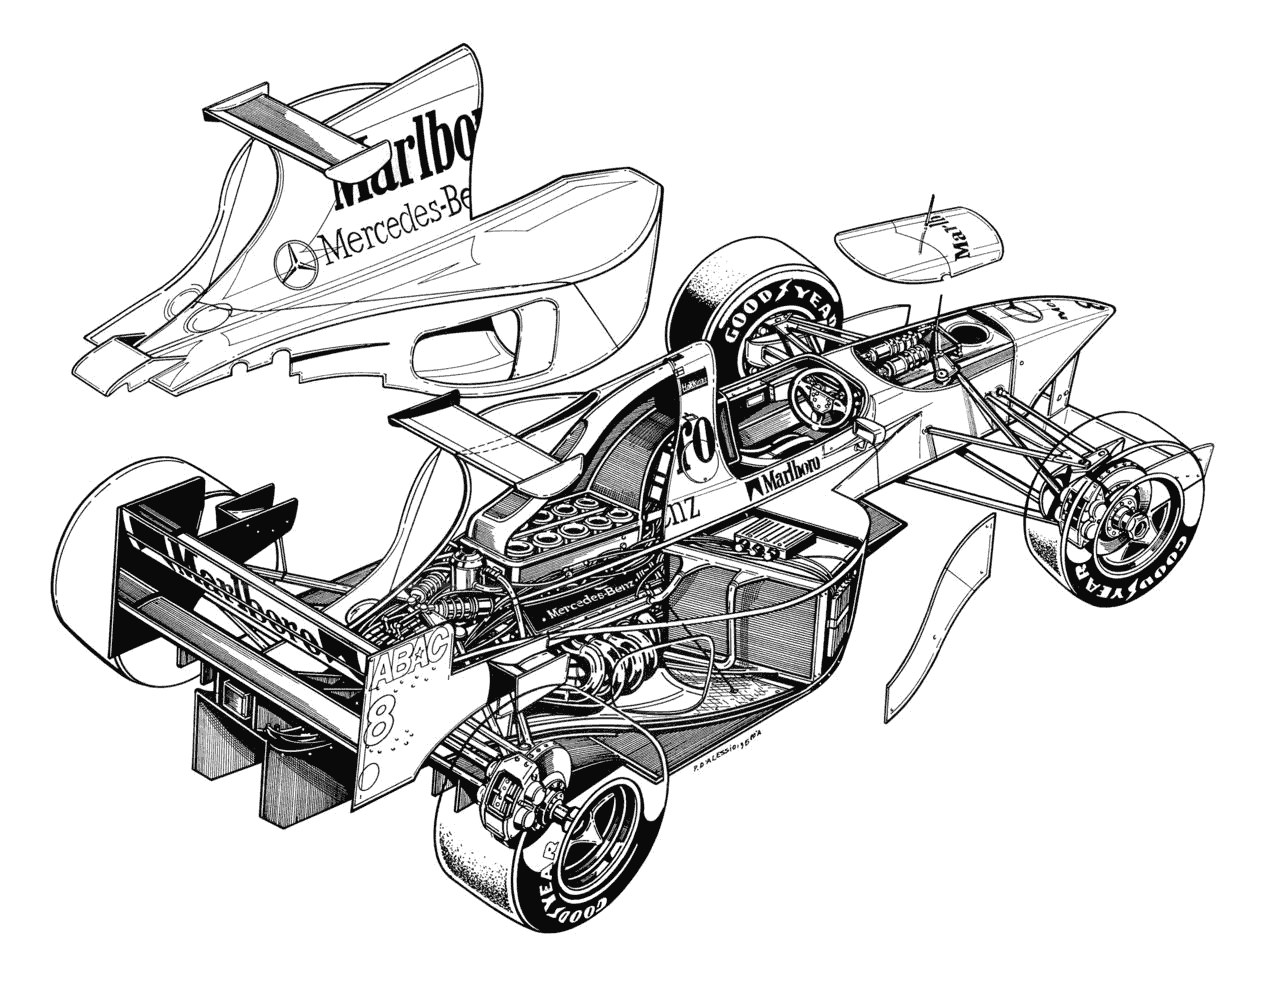 McLaren MP4/10 Cutaway Drawing in High quality